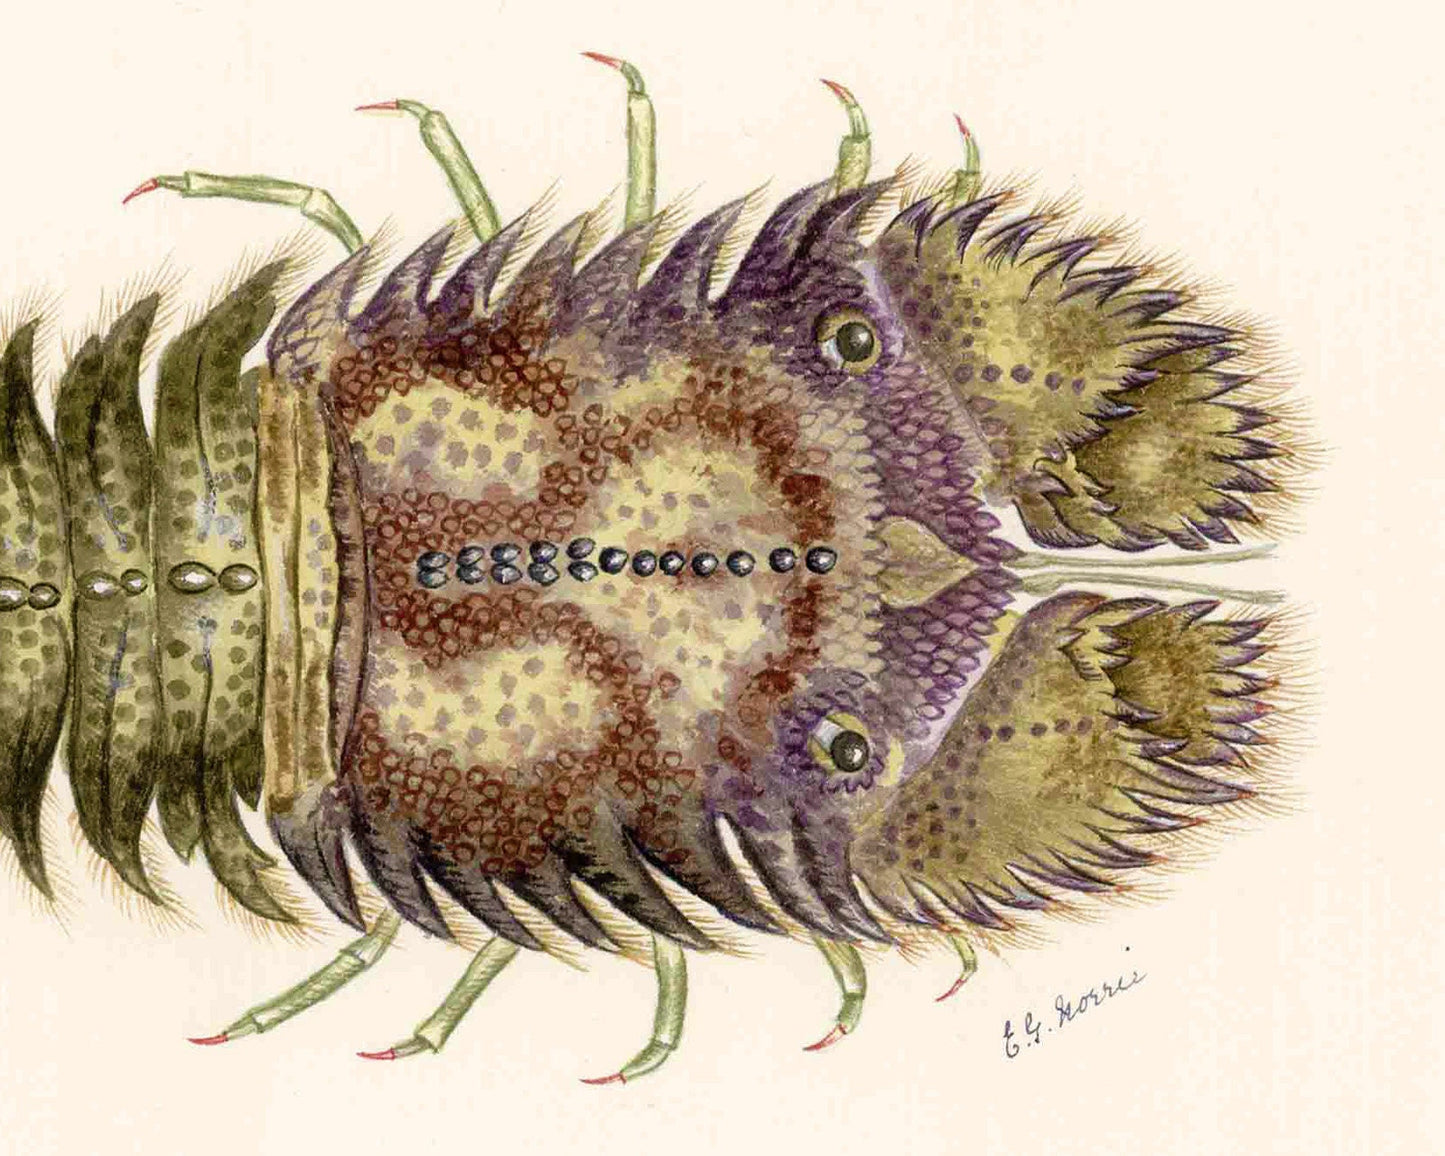 Vintage crawfish art | Female artist Gertrude Norrie | Natural history | Water, ocean animal | Modern vintage décor | Eco-friendly gift